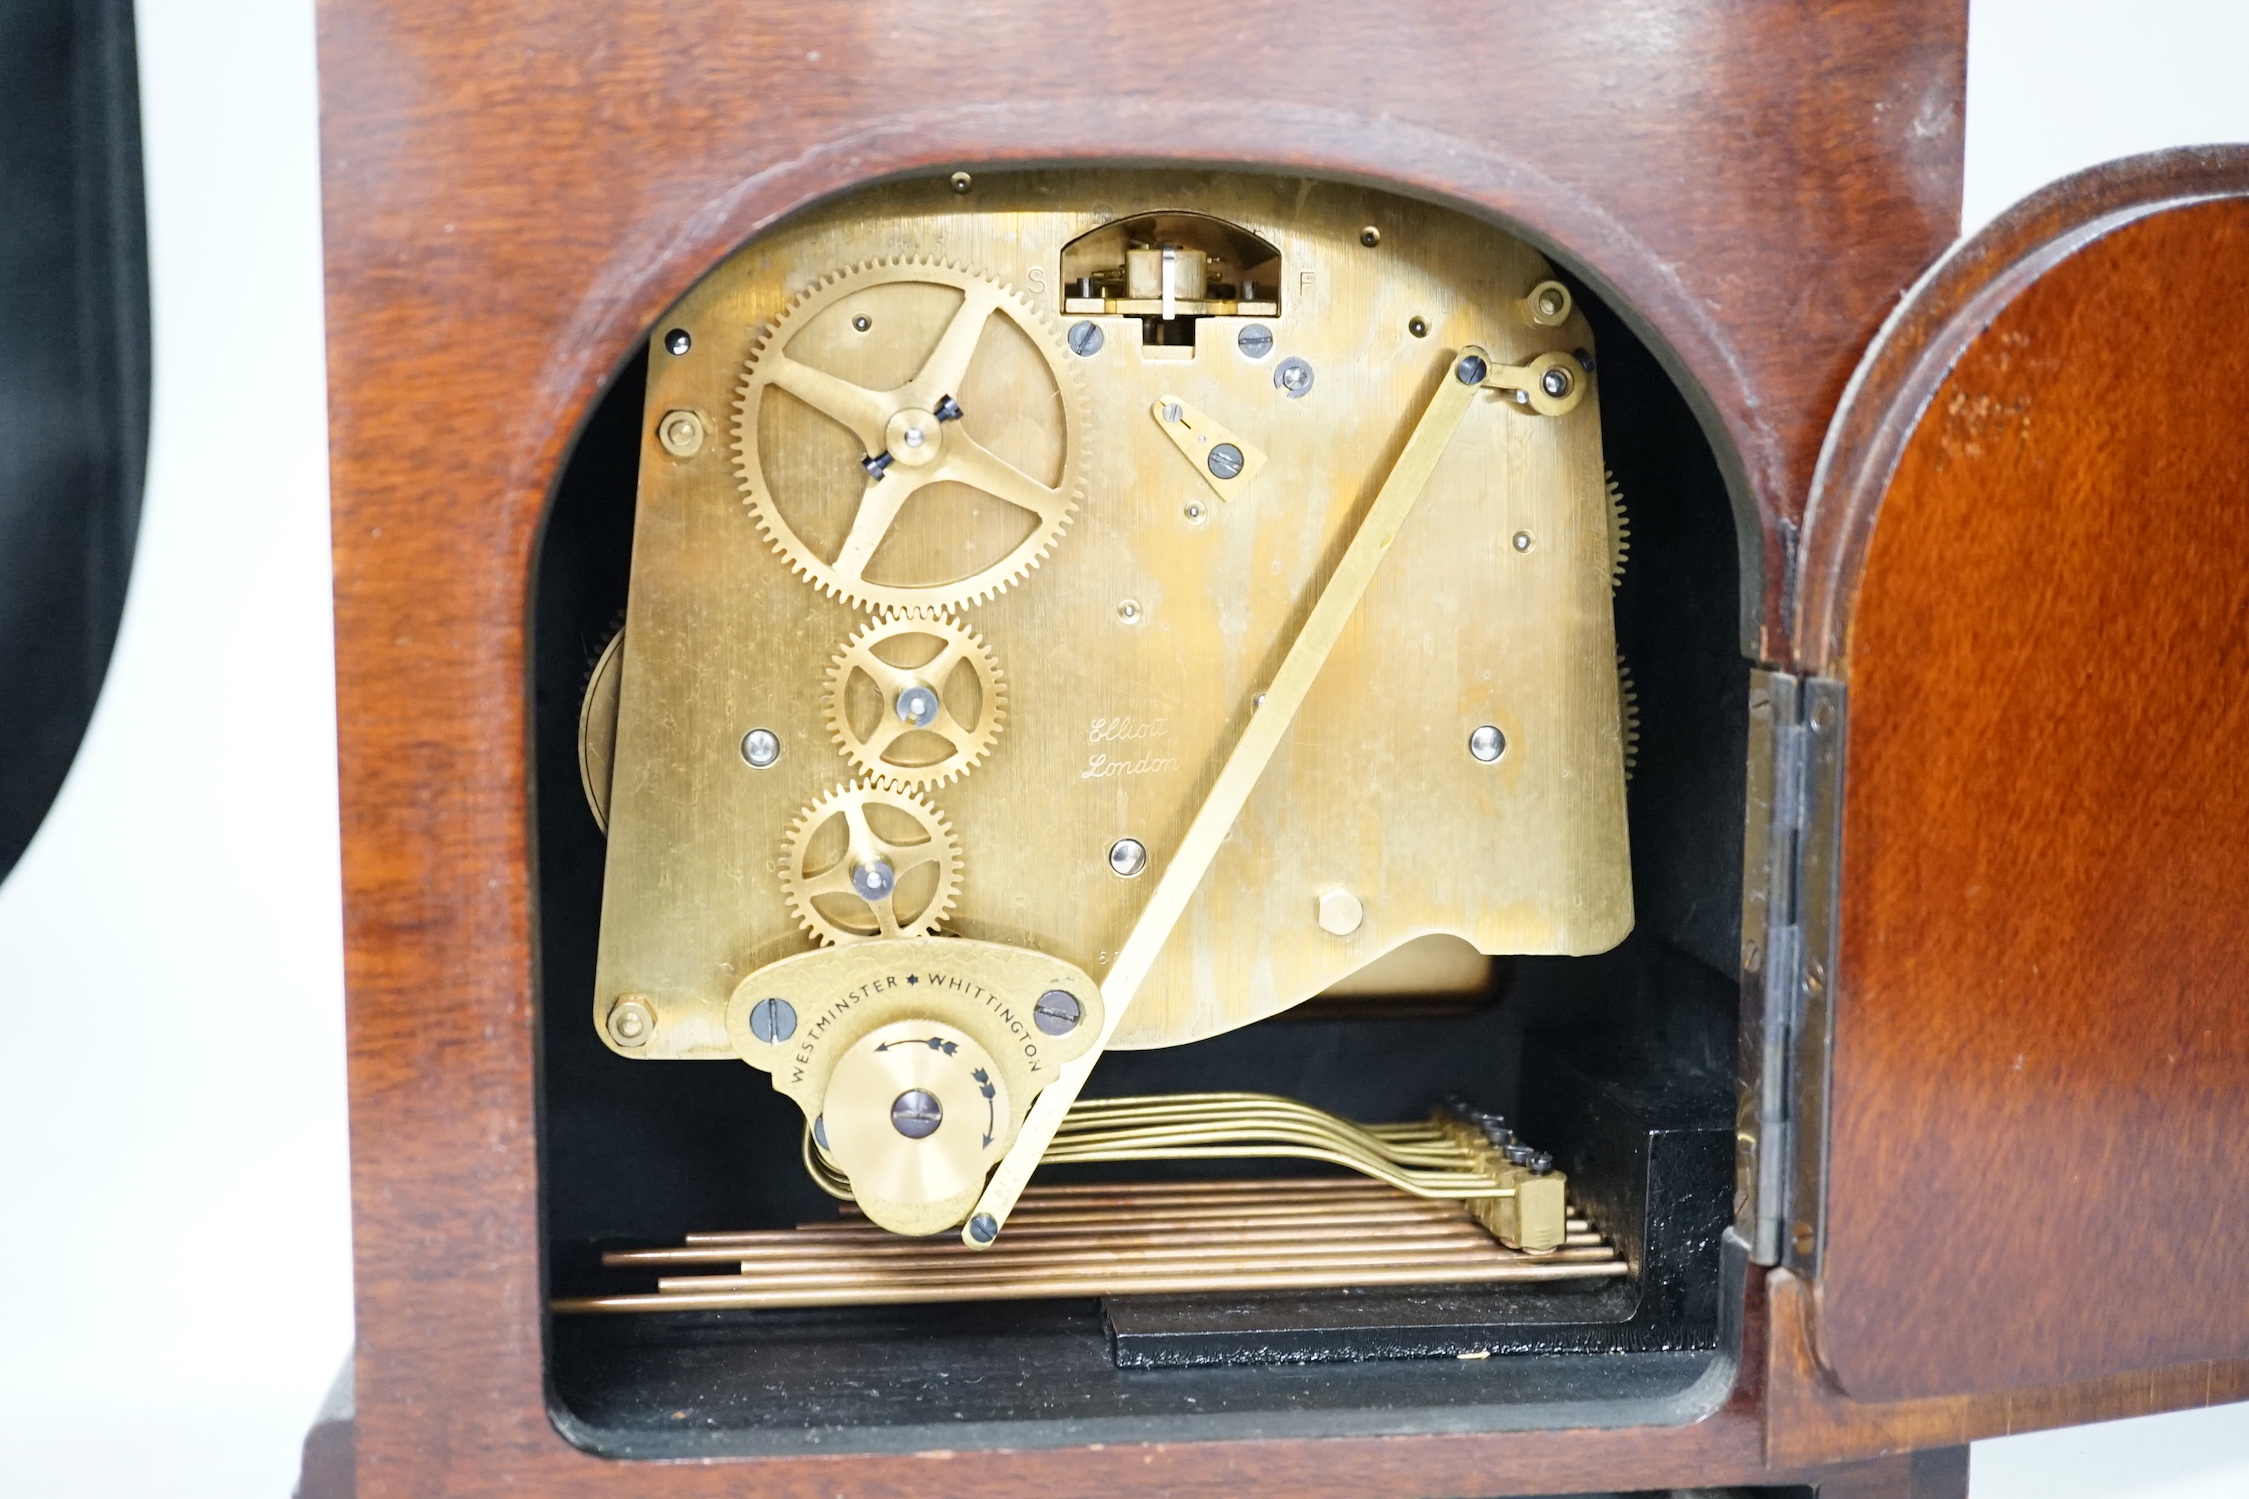 An Elliott walnut mantel clock, traditional dial and chiming movement, 25cm high